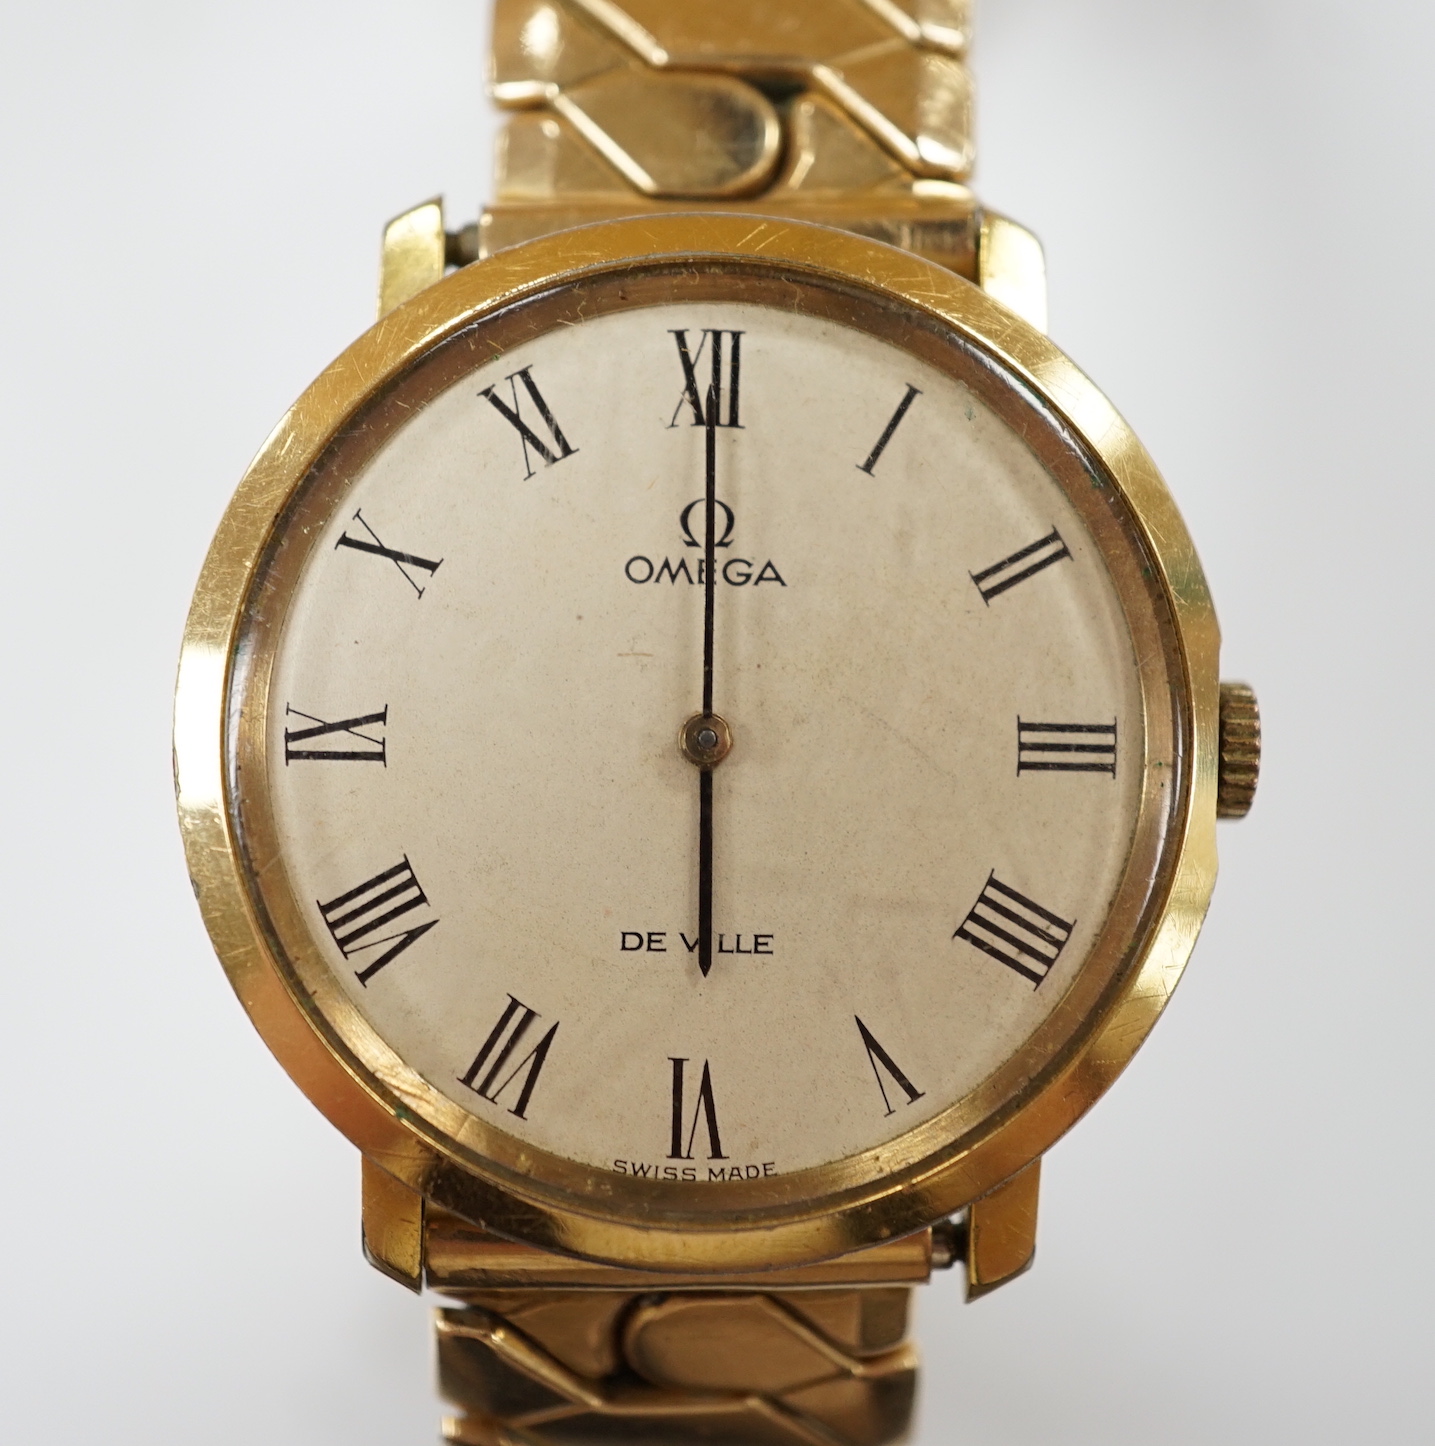 A gentleman's steel and gold plated Omega De Ville manual wind wrist watch, on associated flexible